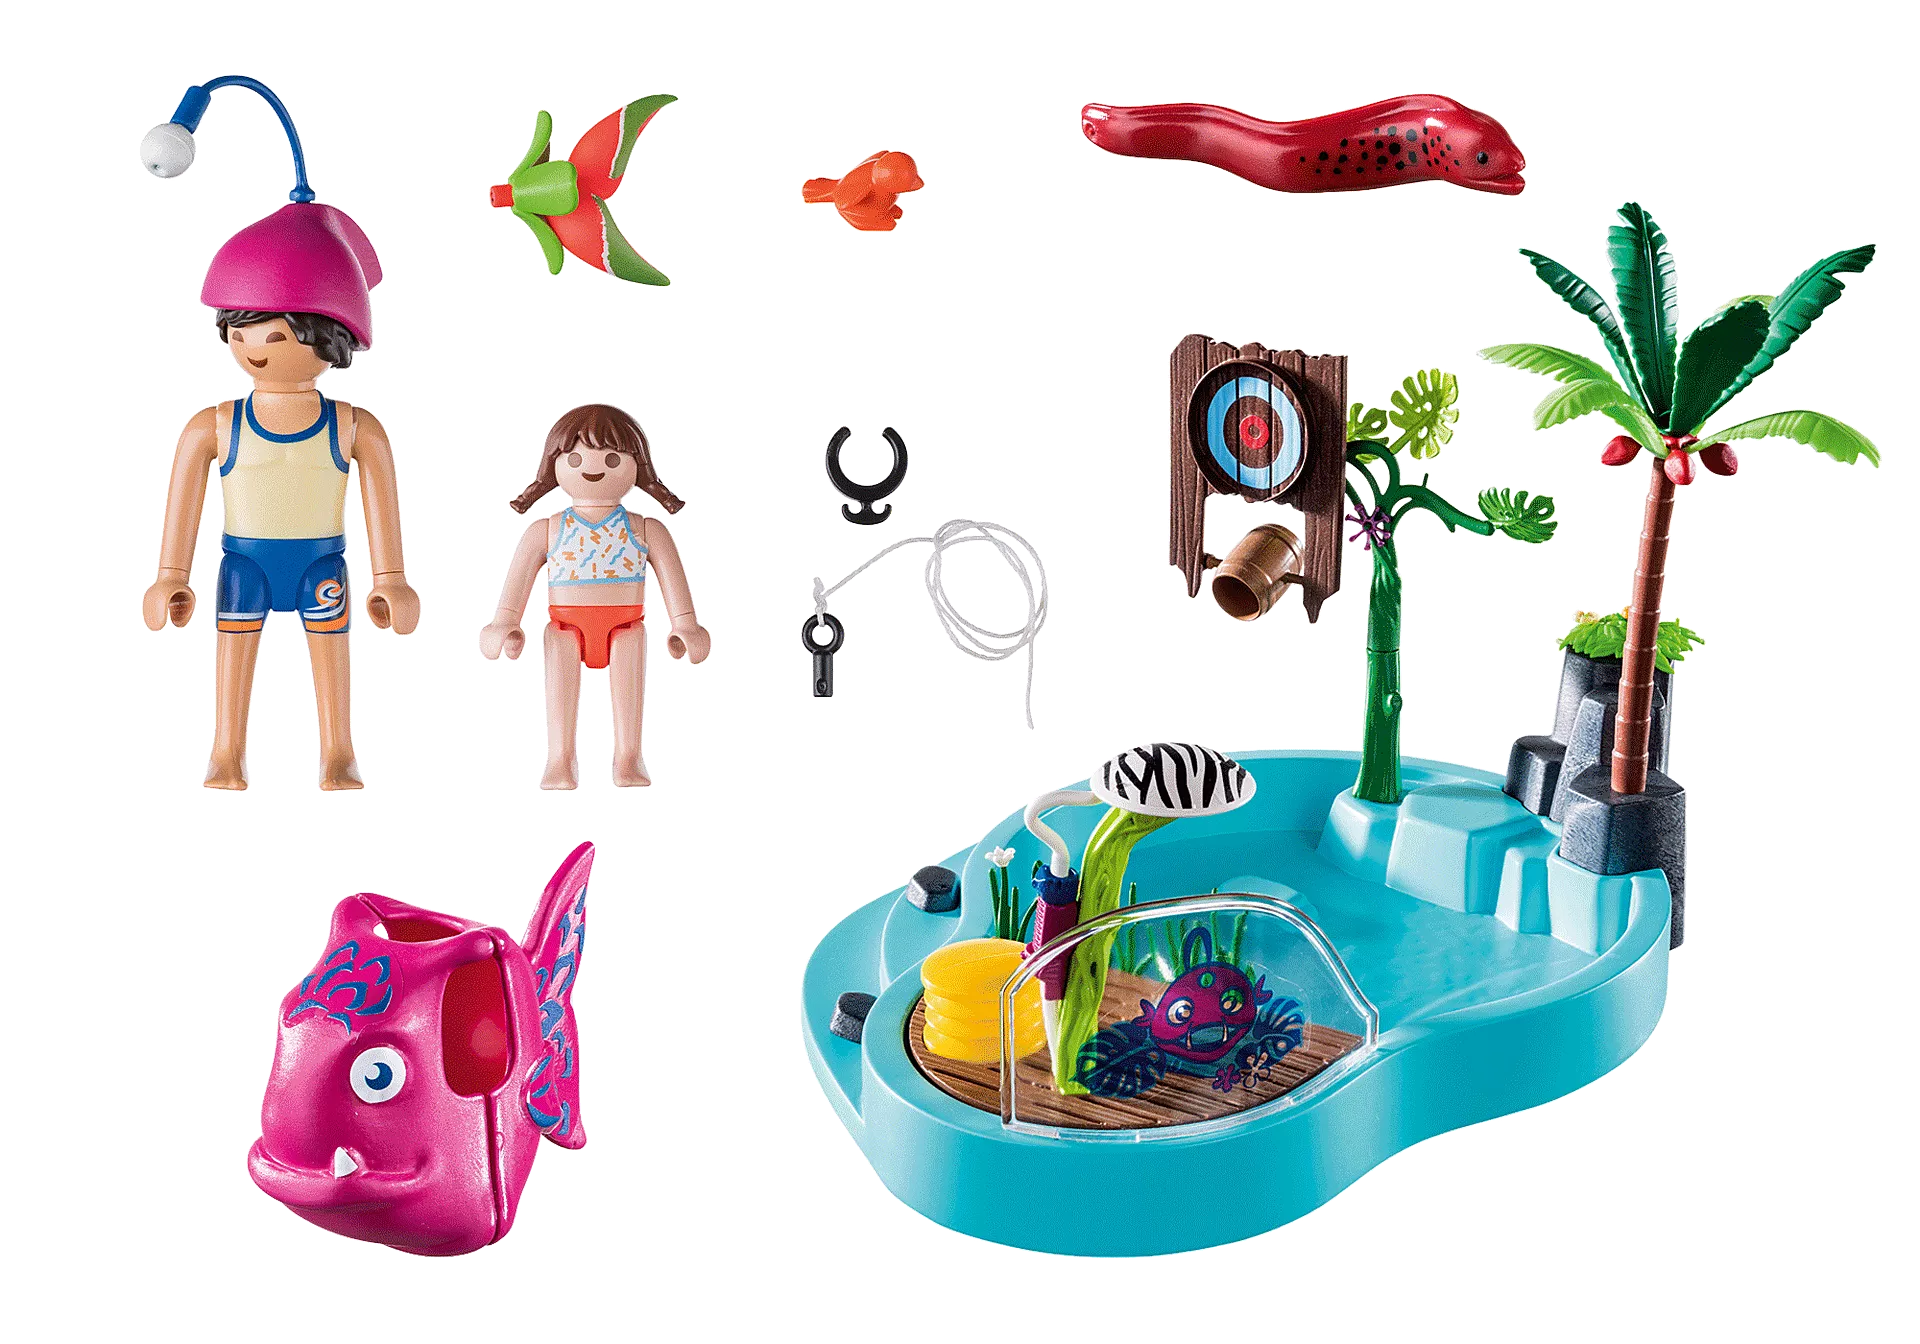 Playmobil Aqua Park Small Pool with Water Sprayer 70610 – Sam